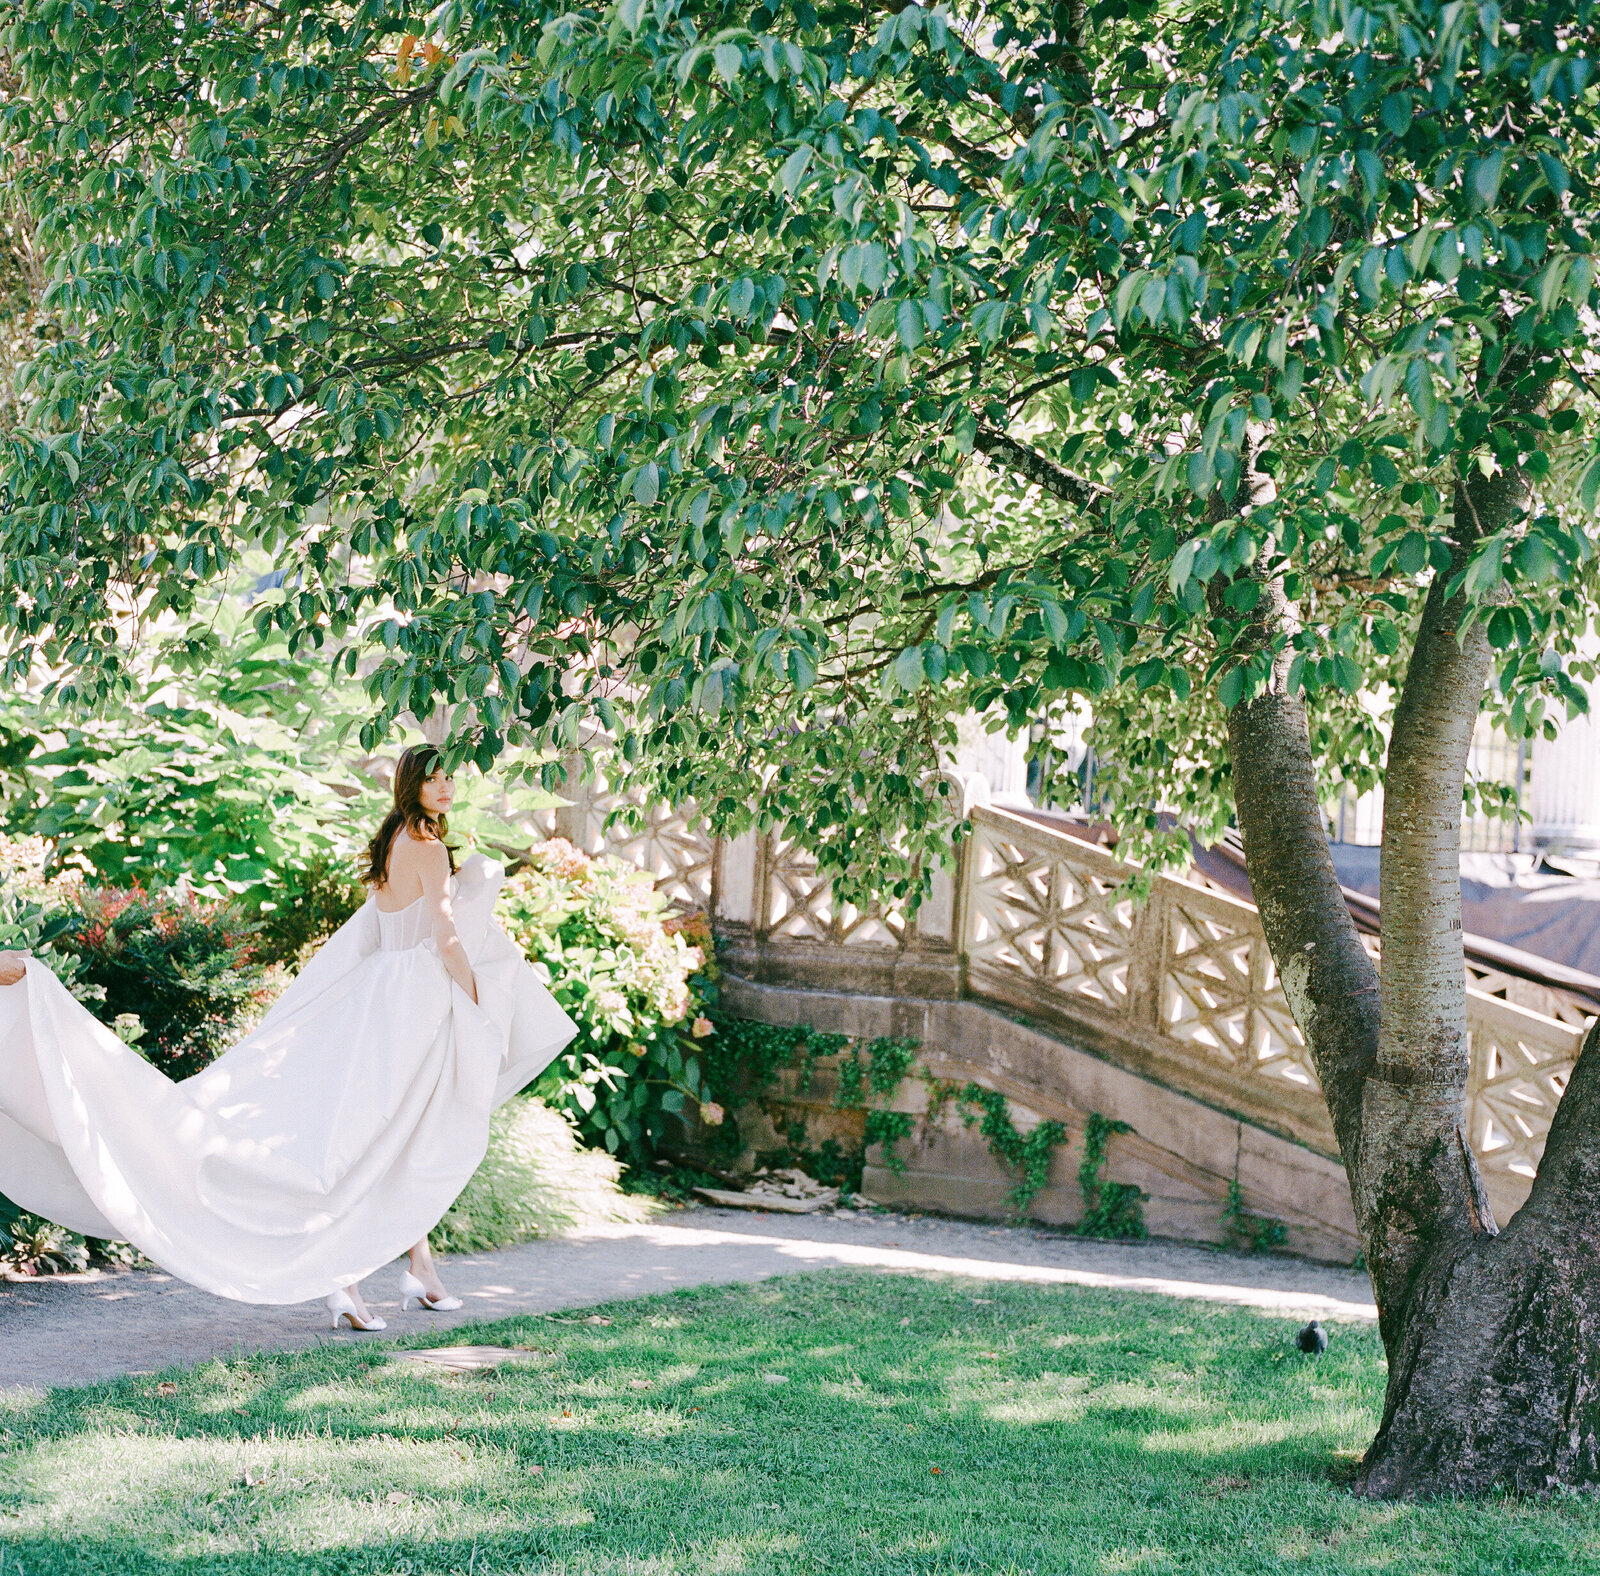 verdin-bridal-nina-shoes-Untermyer-Gardens-Conservancy-NY-BAZAAR-brides-Little-Black-Book-harpers-BAZAAR-A-Top-Wedding-Photographer-in-the-World-judith-rae-0038